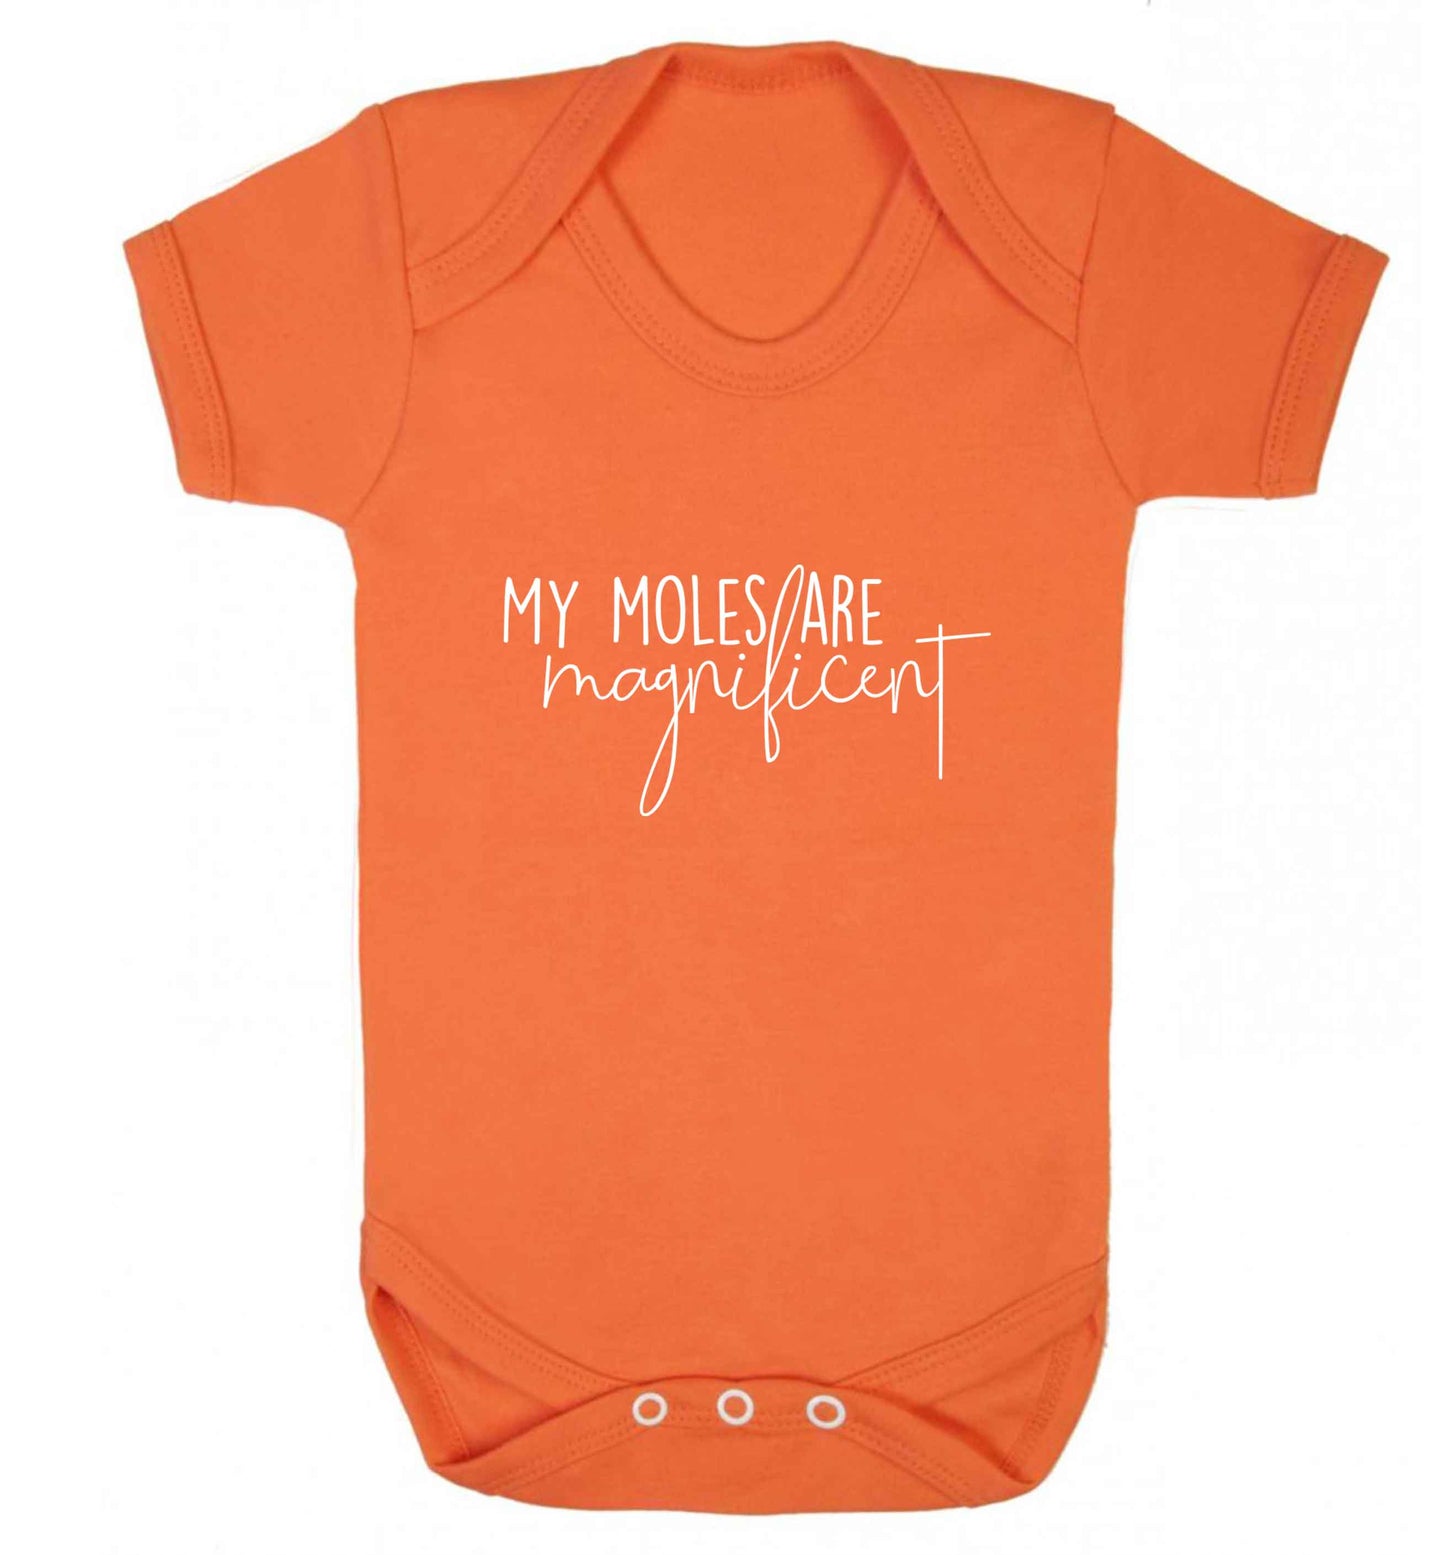 My moles are magnificent baby vest orange 18-24 months